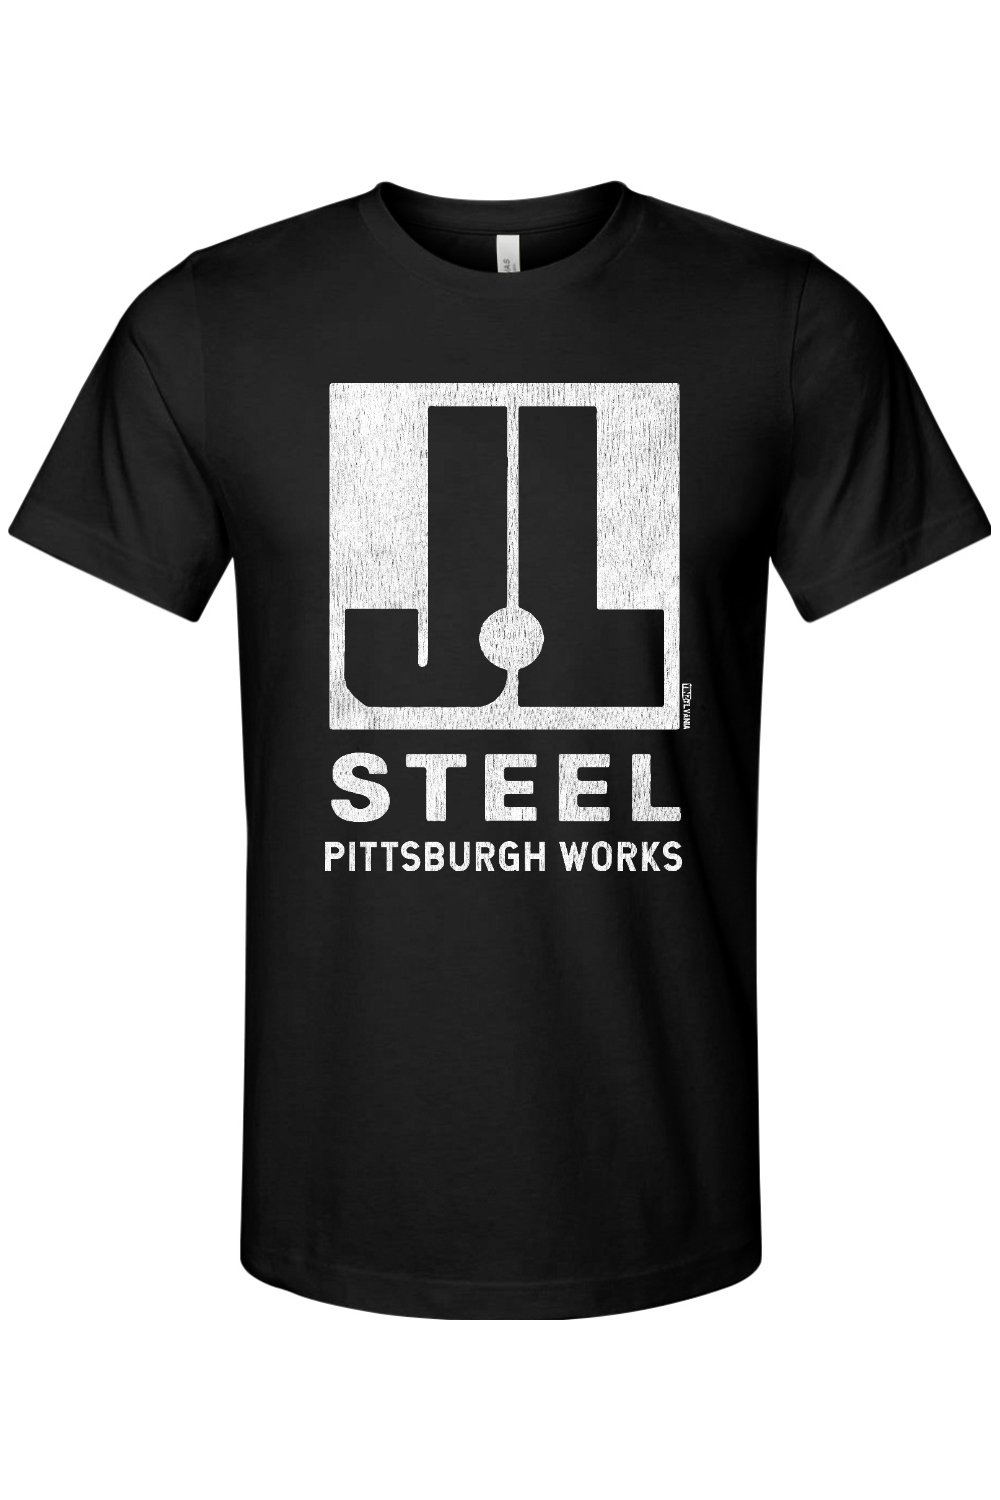 J&L Steel - Pittsburgh Works - Bella + Canvas Jersey Tee - Yinzylvania